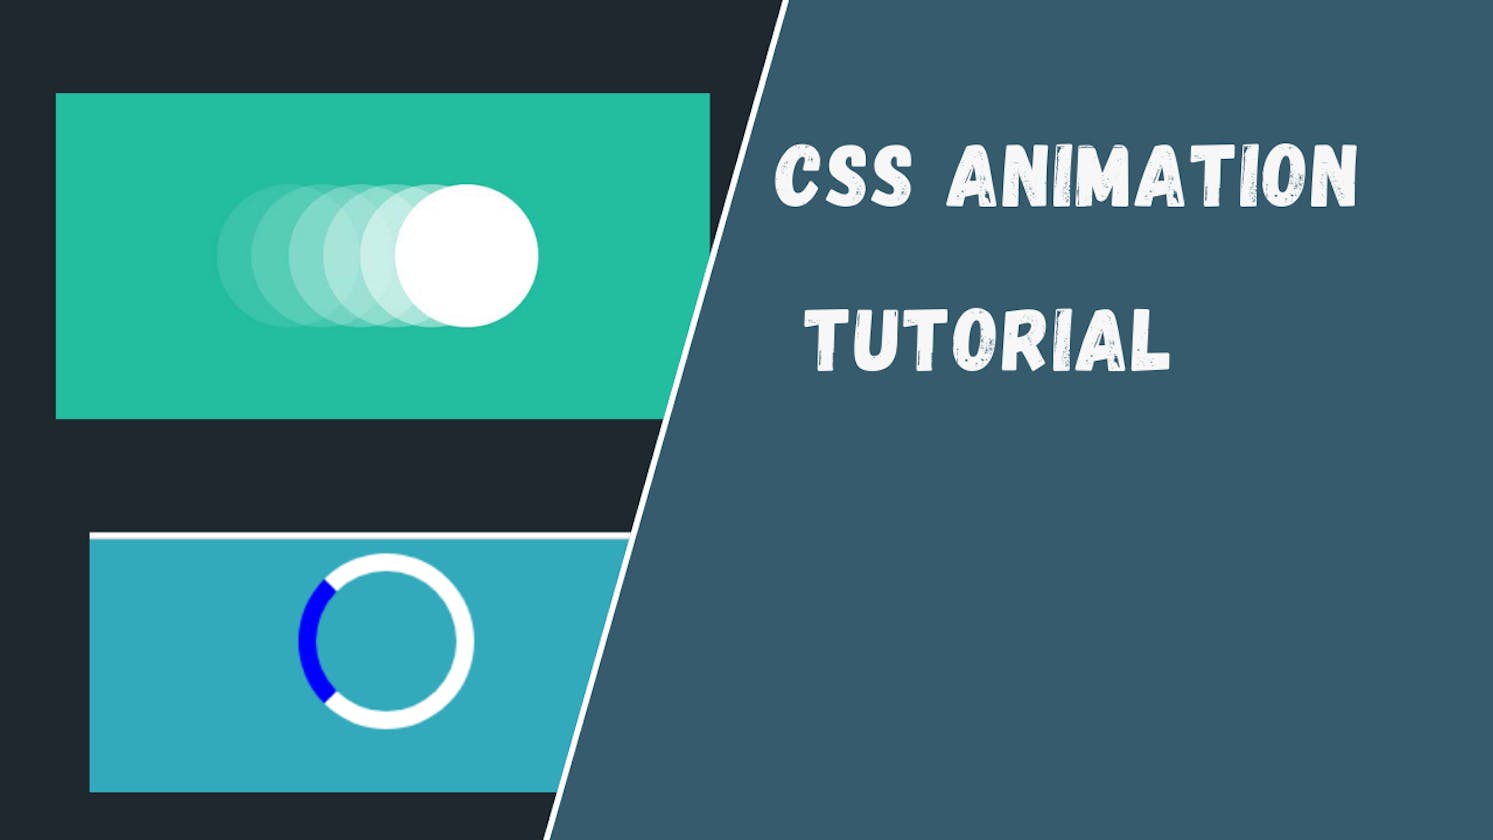 CSS animations